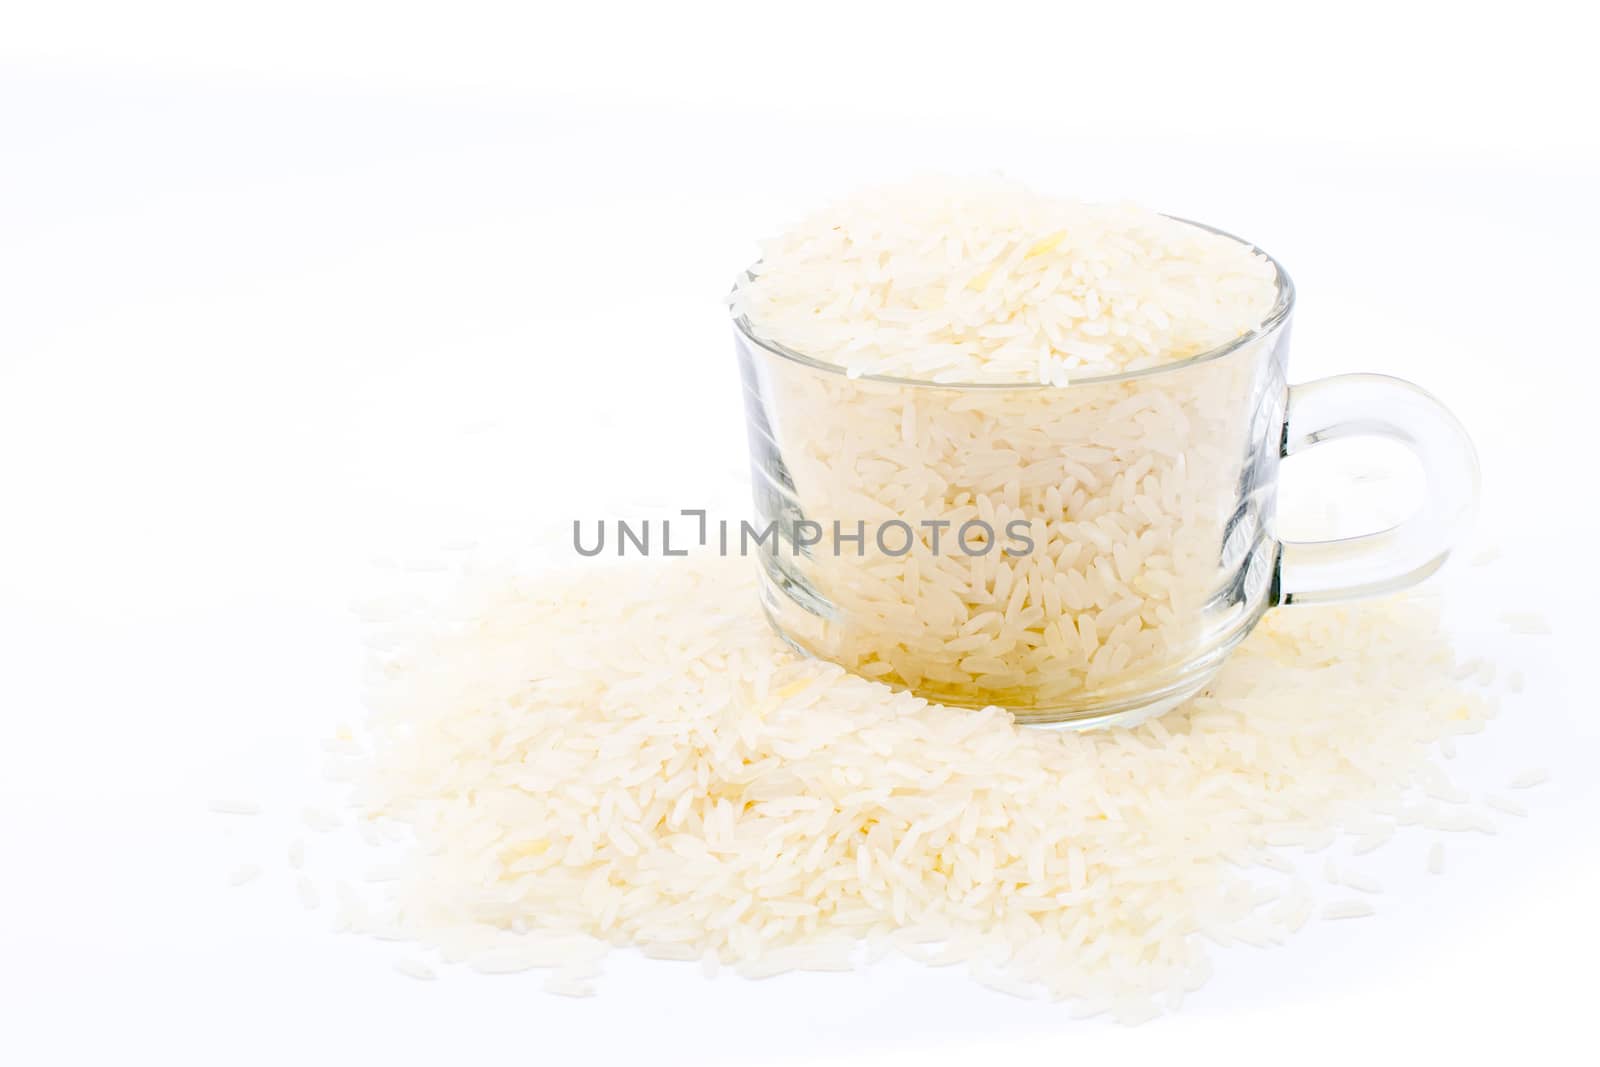 rice grain on white background